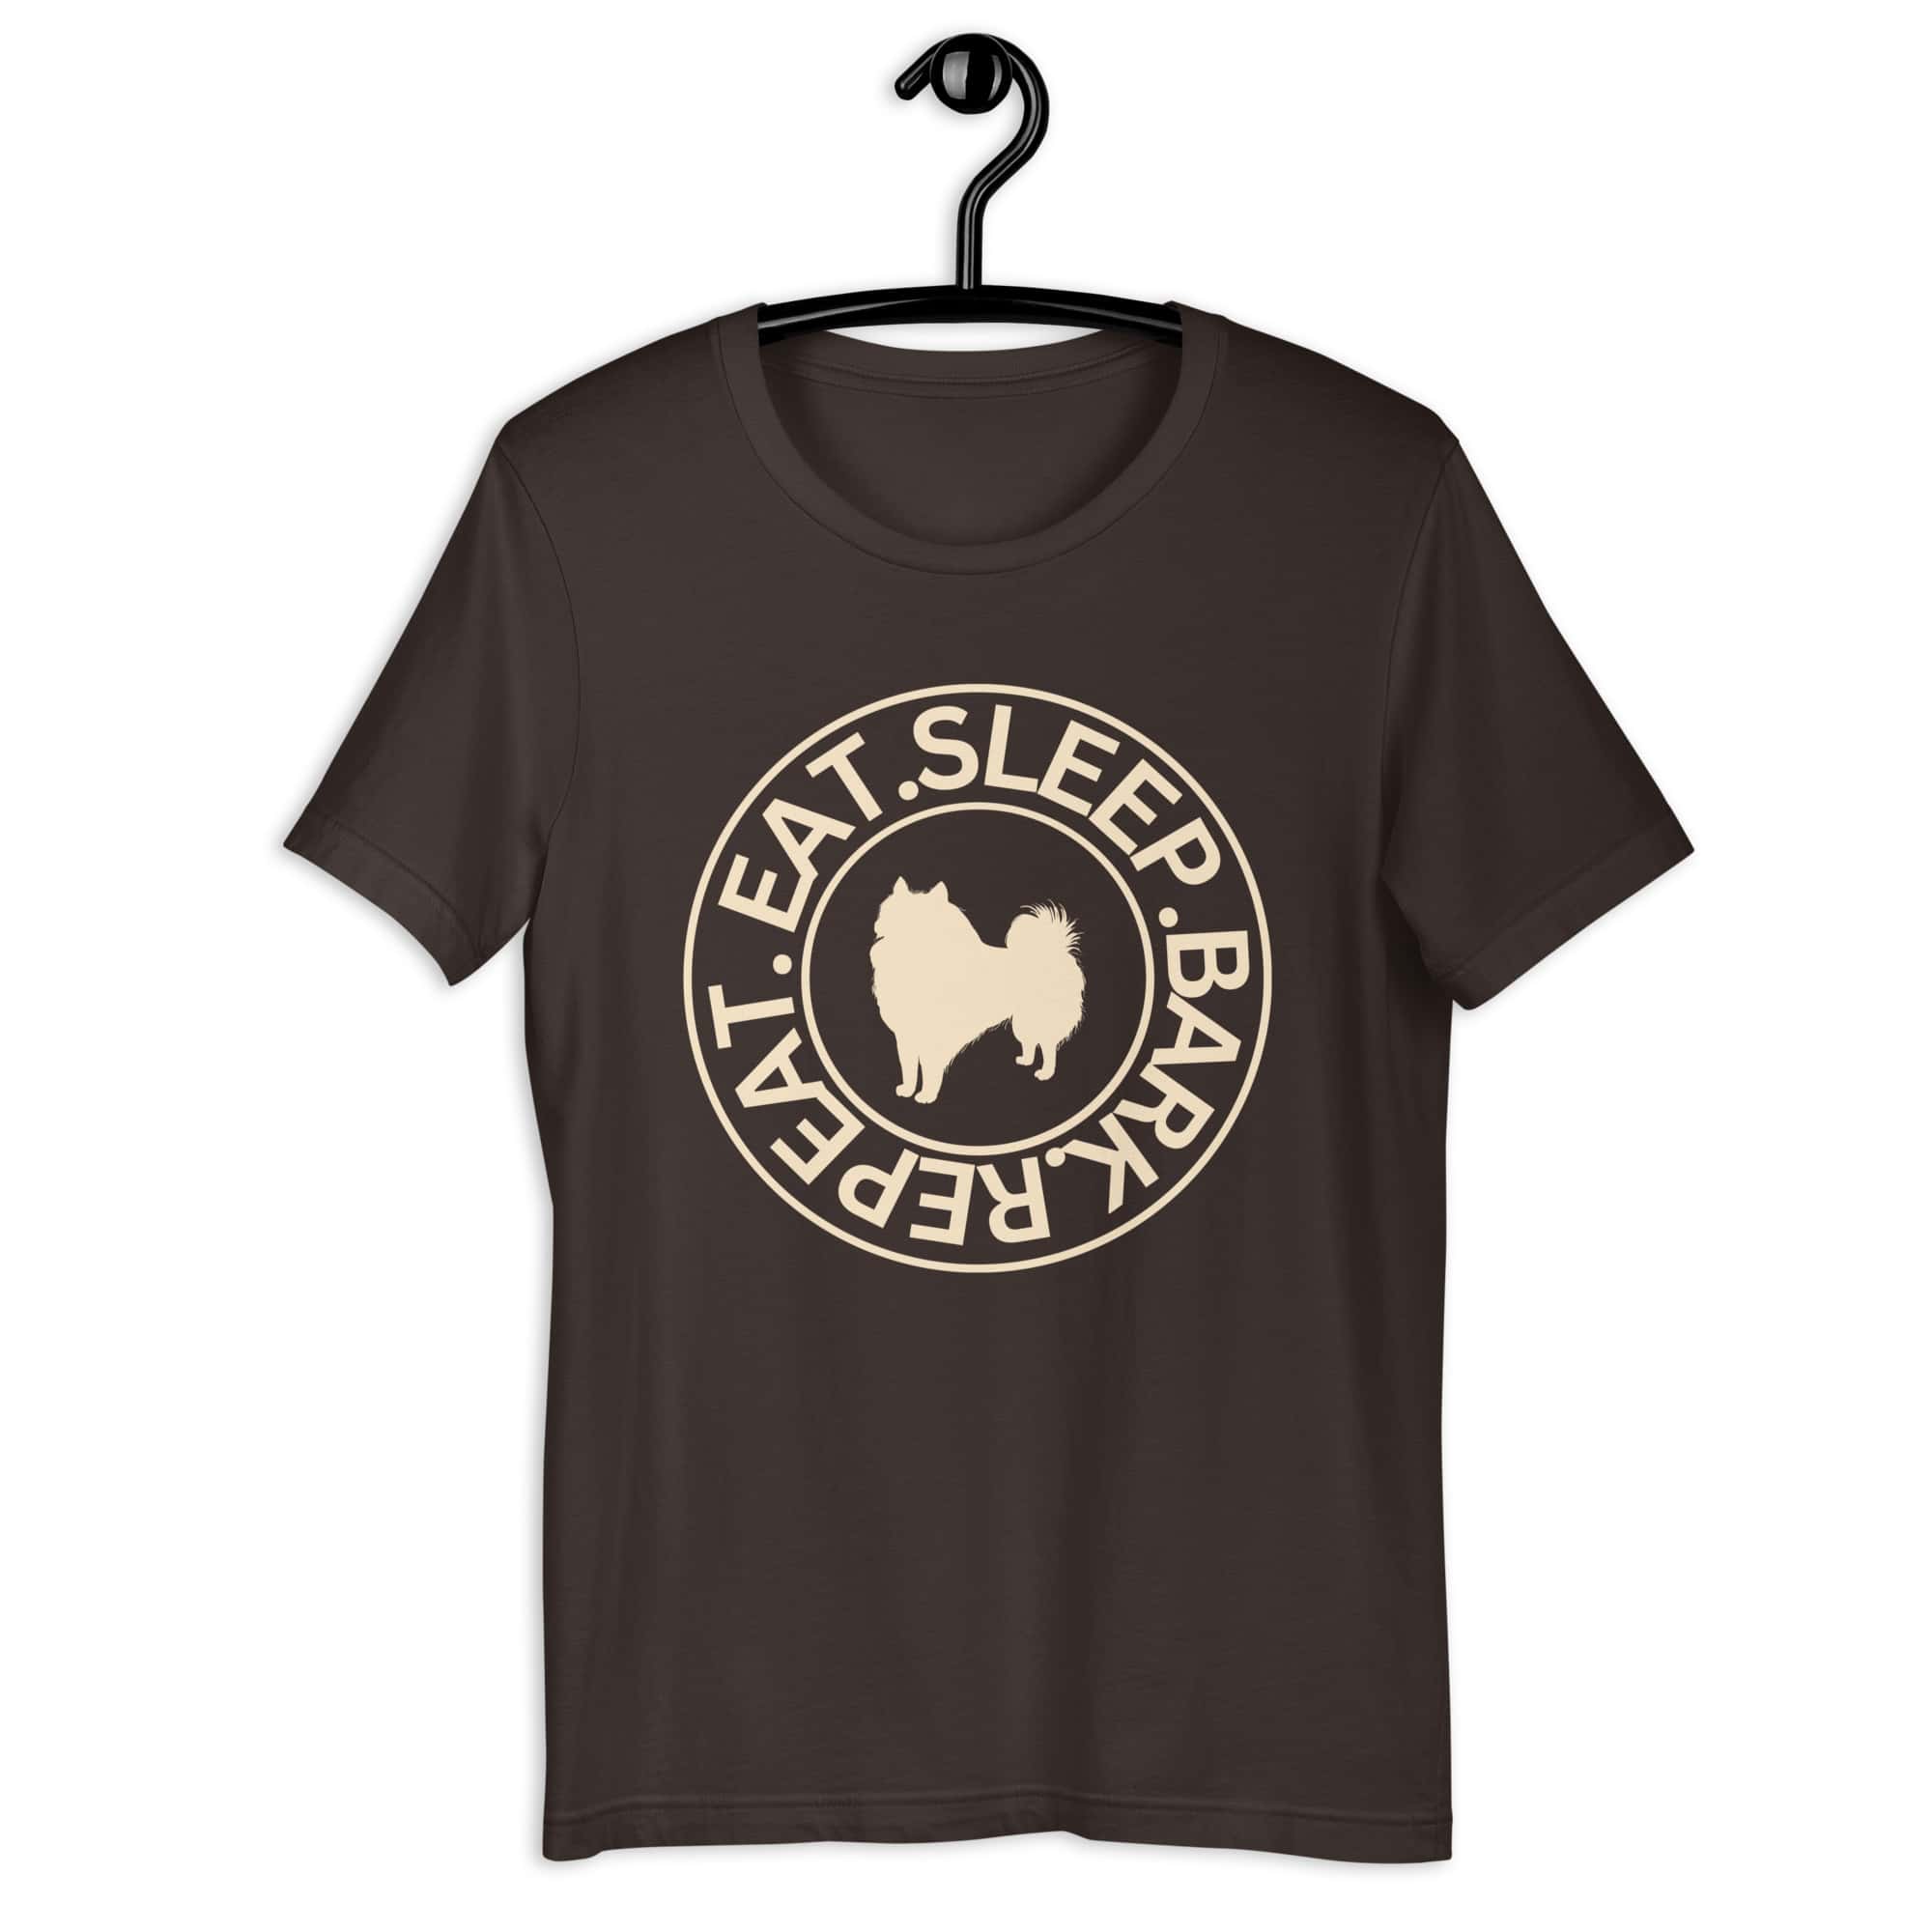 Eat Sleep Bark Repeat Poodle Unisex T-Shirt. Brown